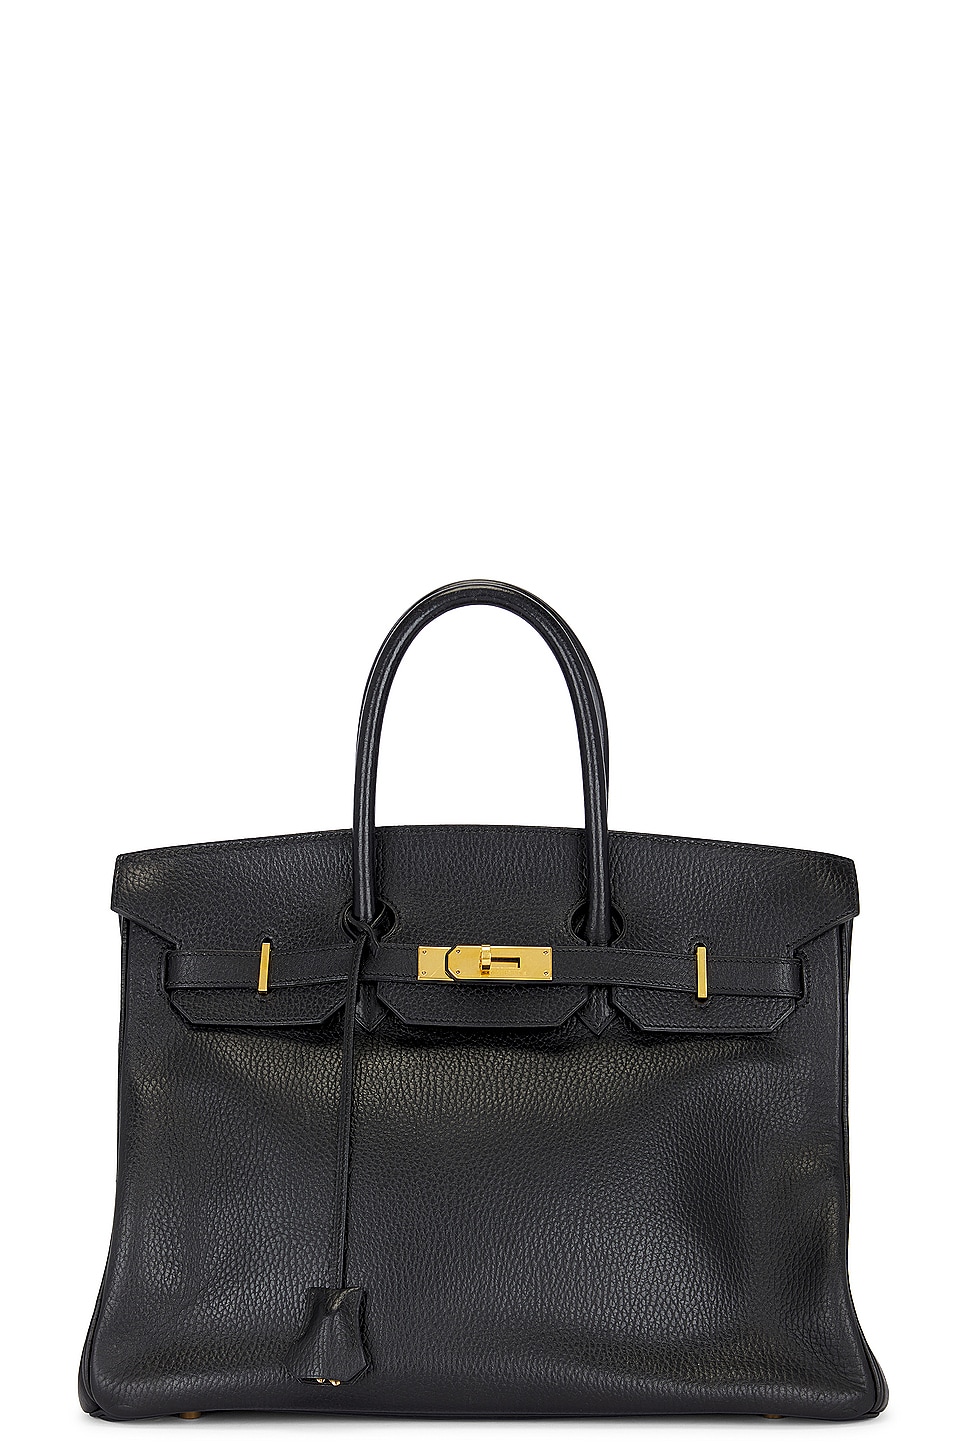 Birkin 35 Handbag in Black